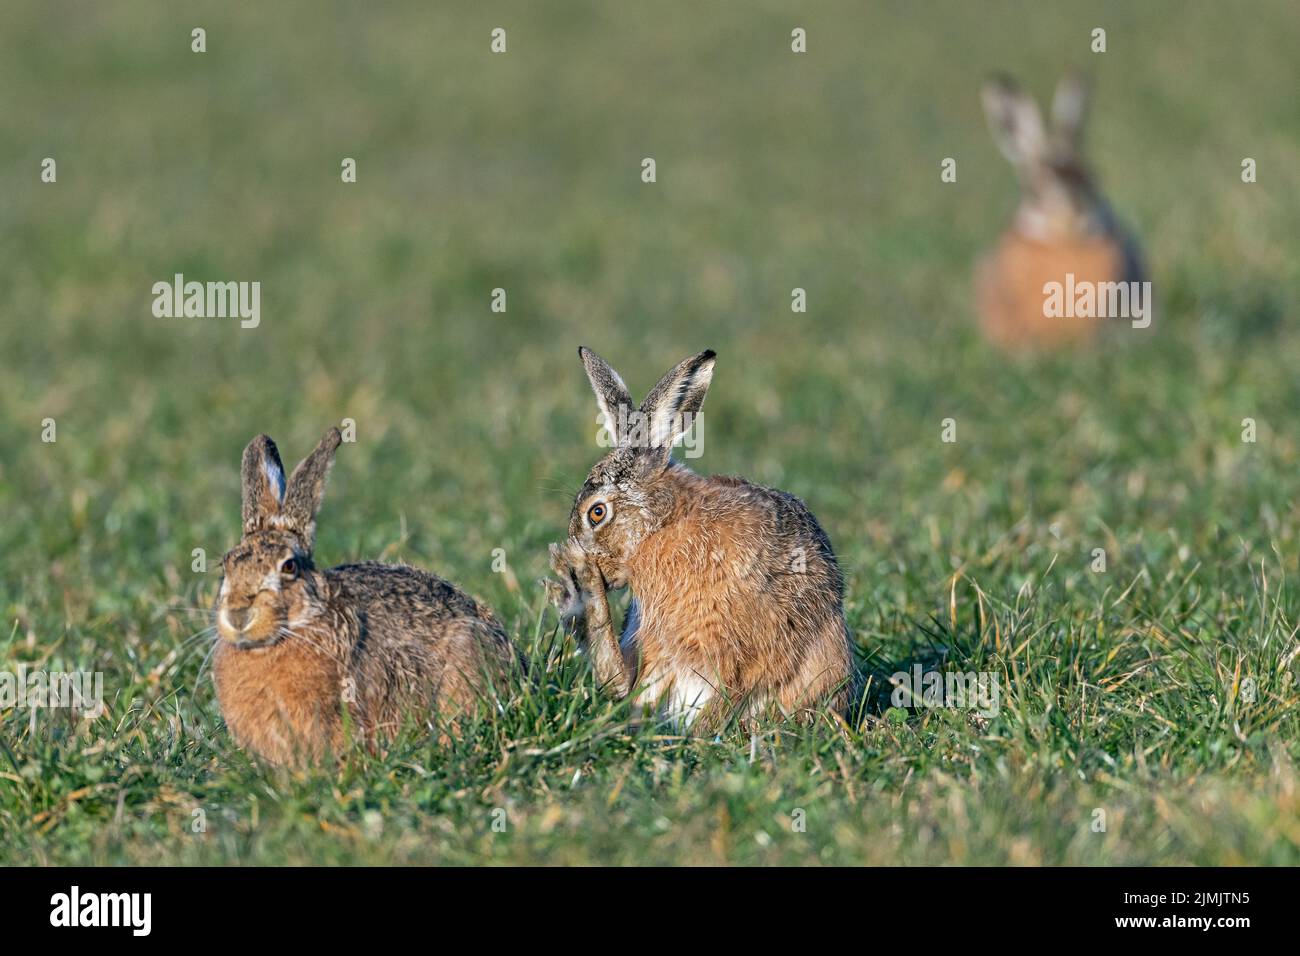 Tense calm between buck and female European Hare / Lepus europaeus Stock Photo